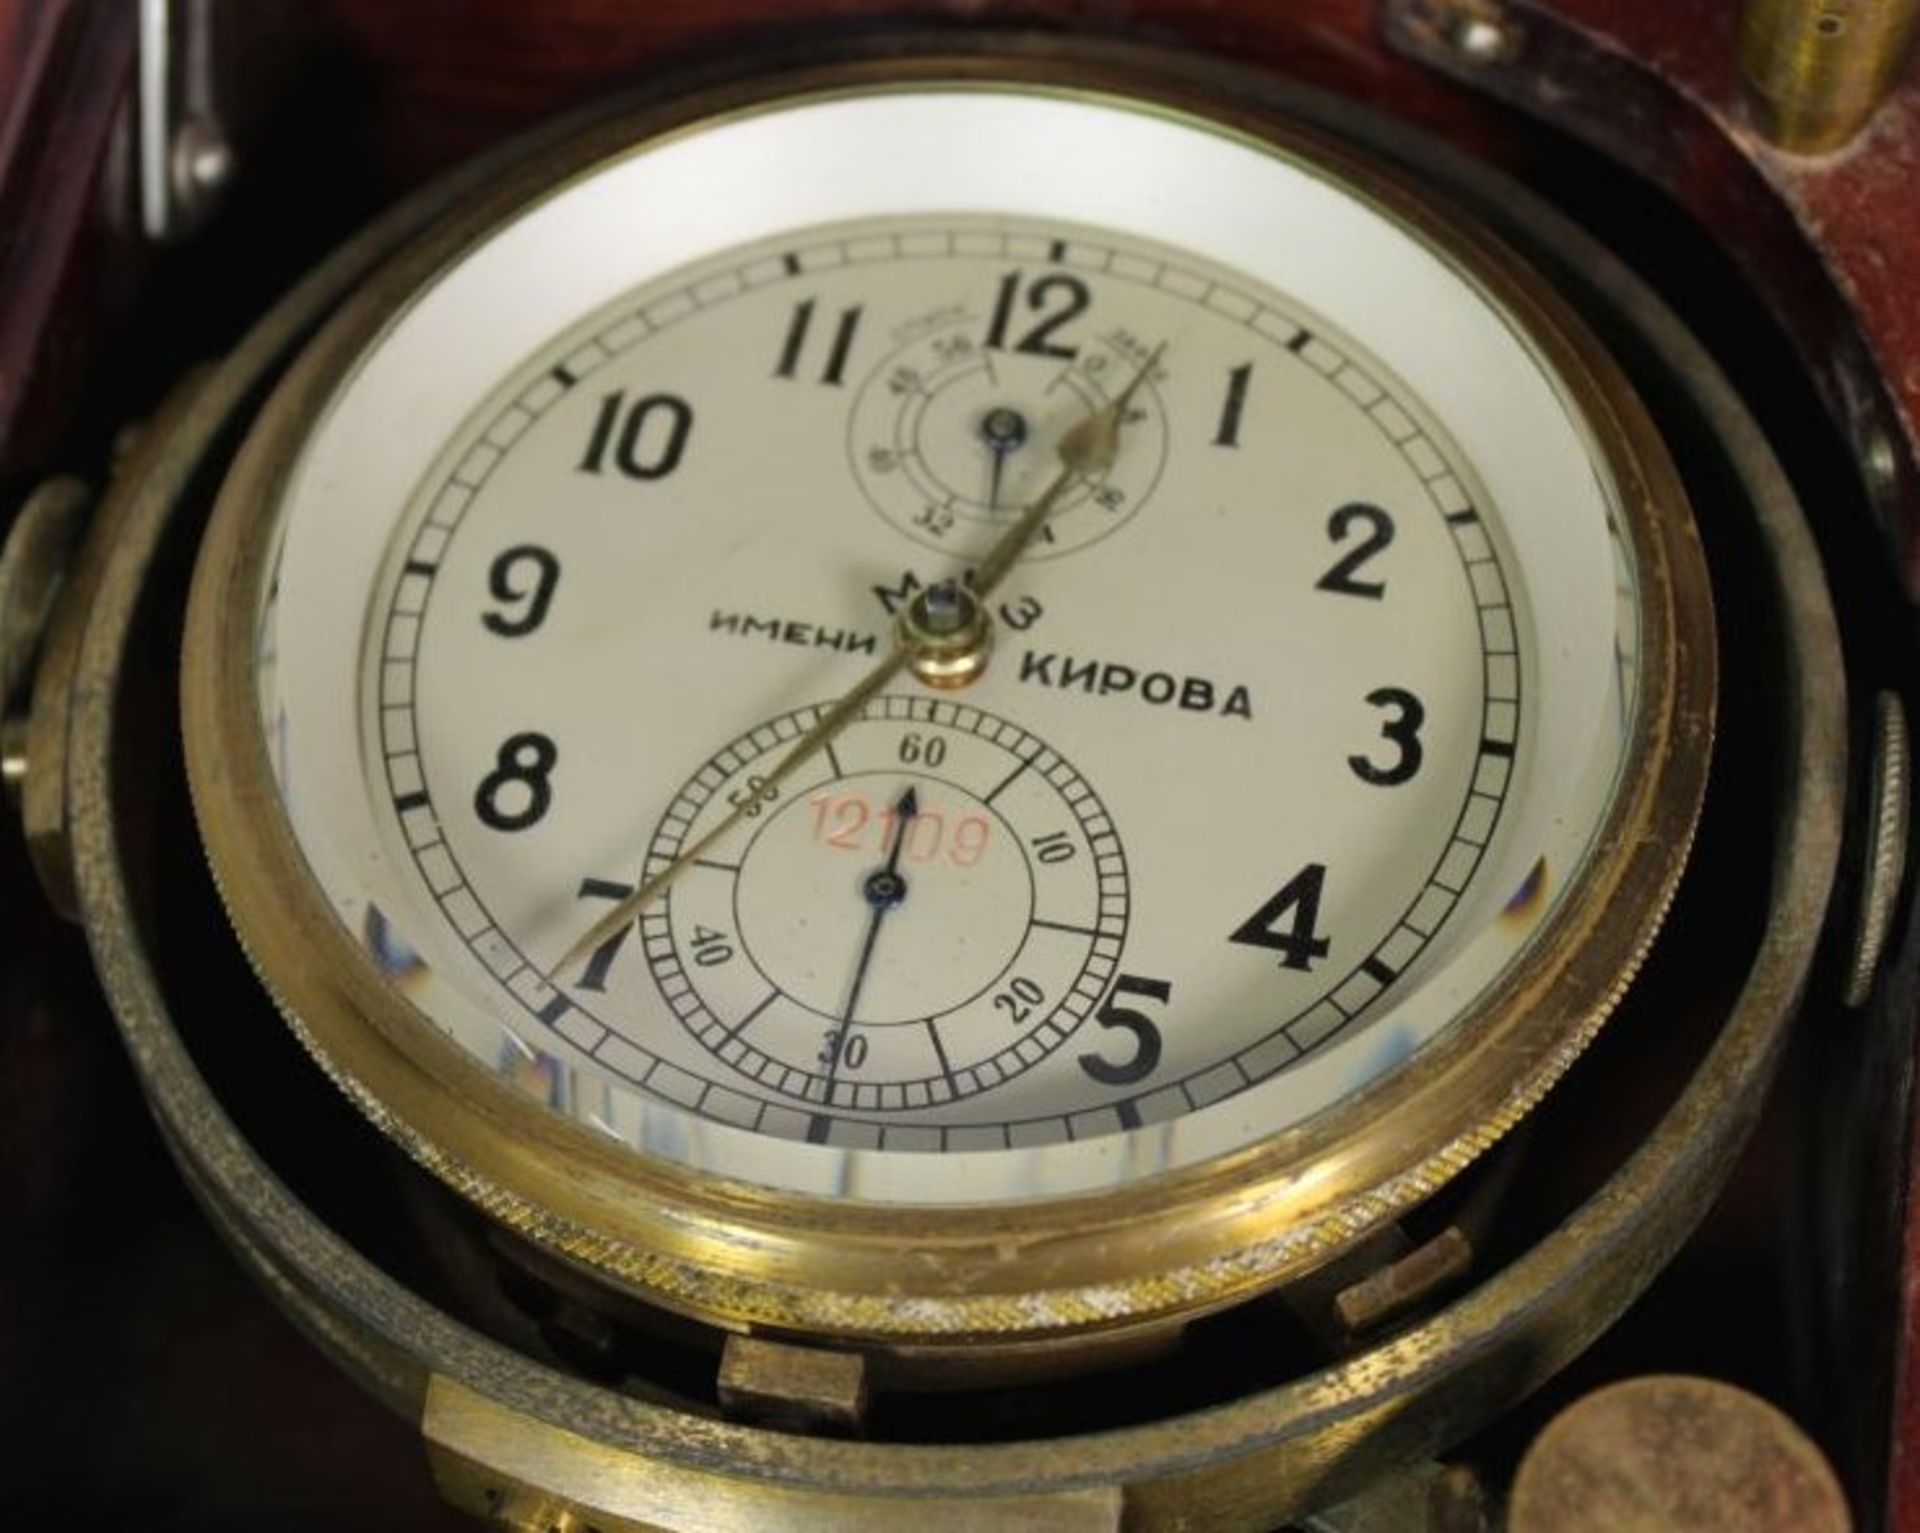 Schiffschronometer "Erste Moskauer Uhrenfabrik Kirowa", CCCP, Marinechronometer Poljot, , Nr. 12109,